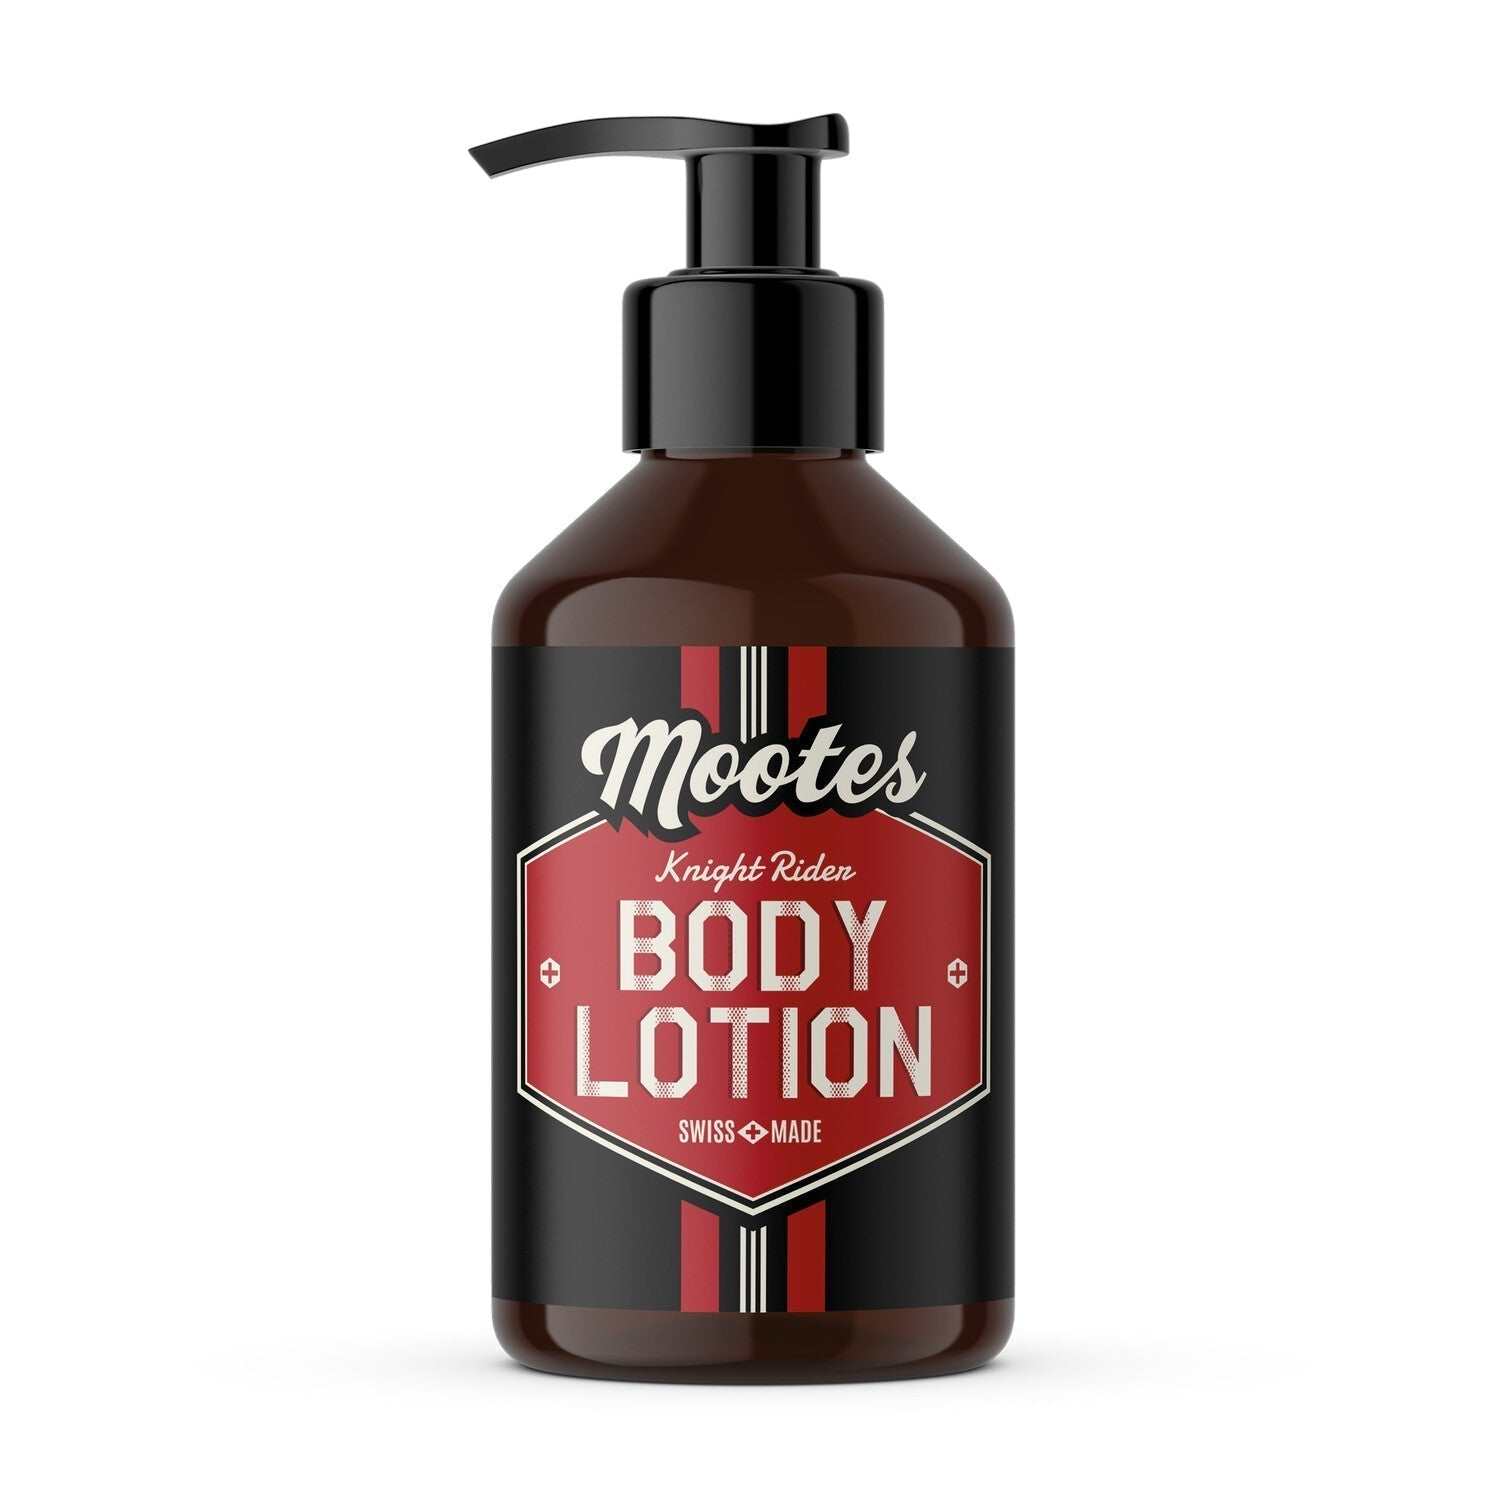 Bodylotion Knight Rider - Mootes